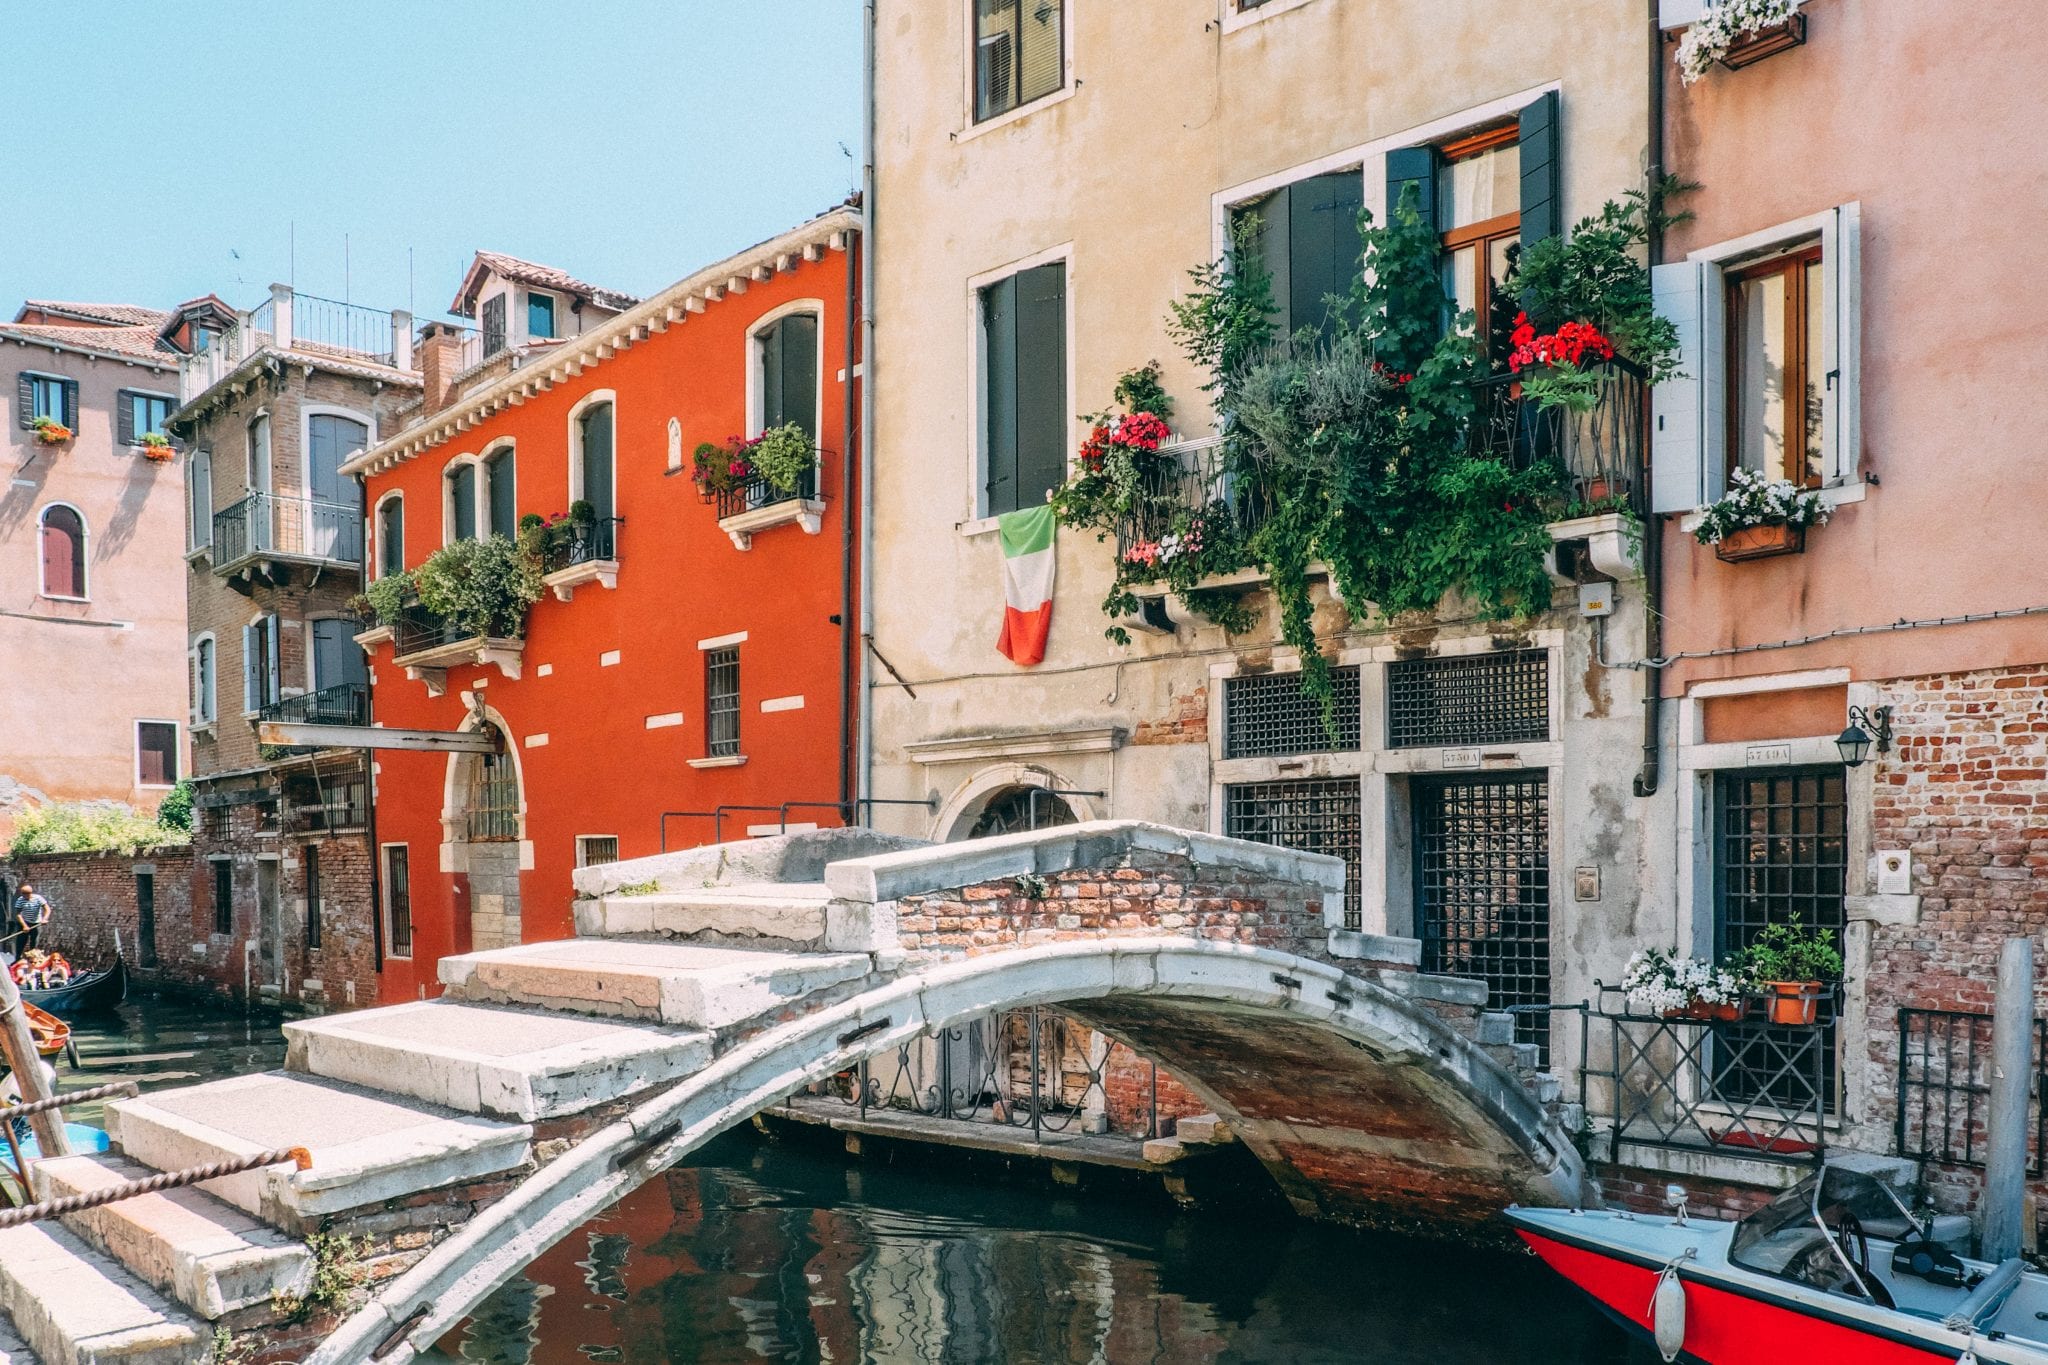 100+ Venice Quotes & Puns for Romantic Instagram Captions